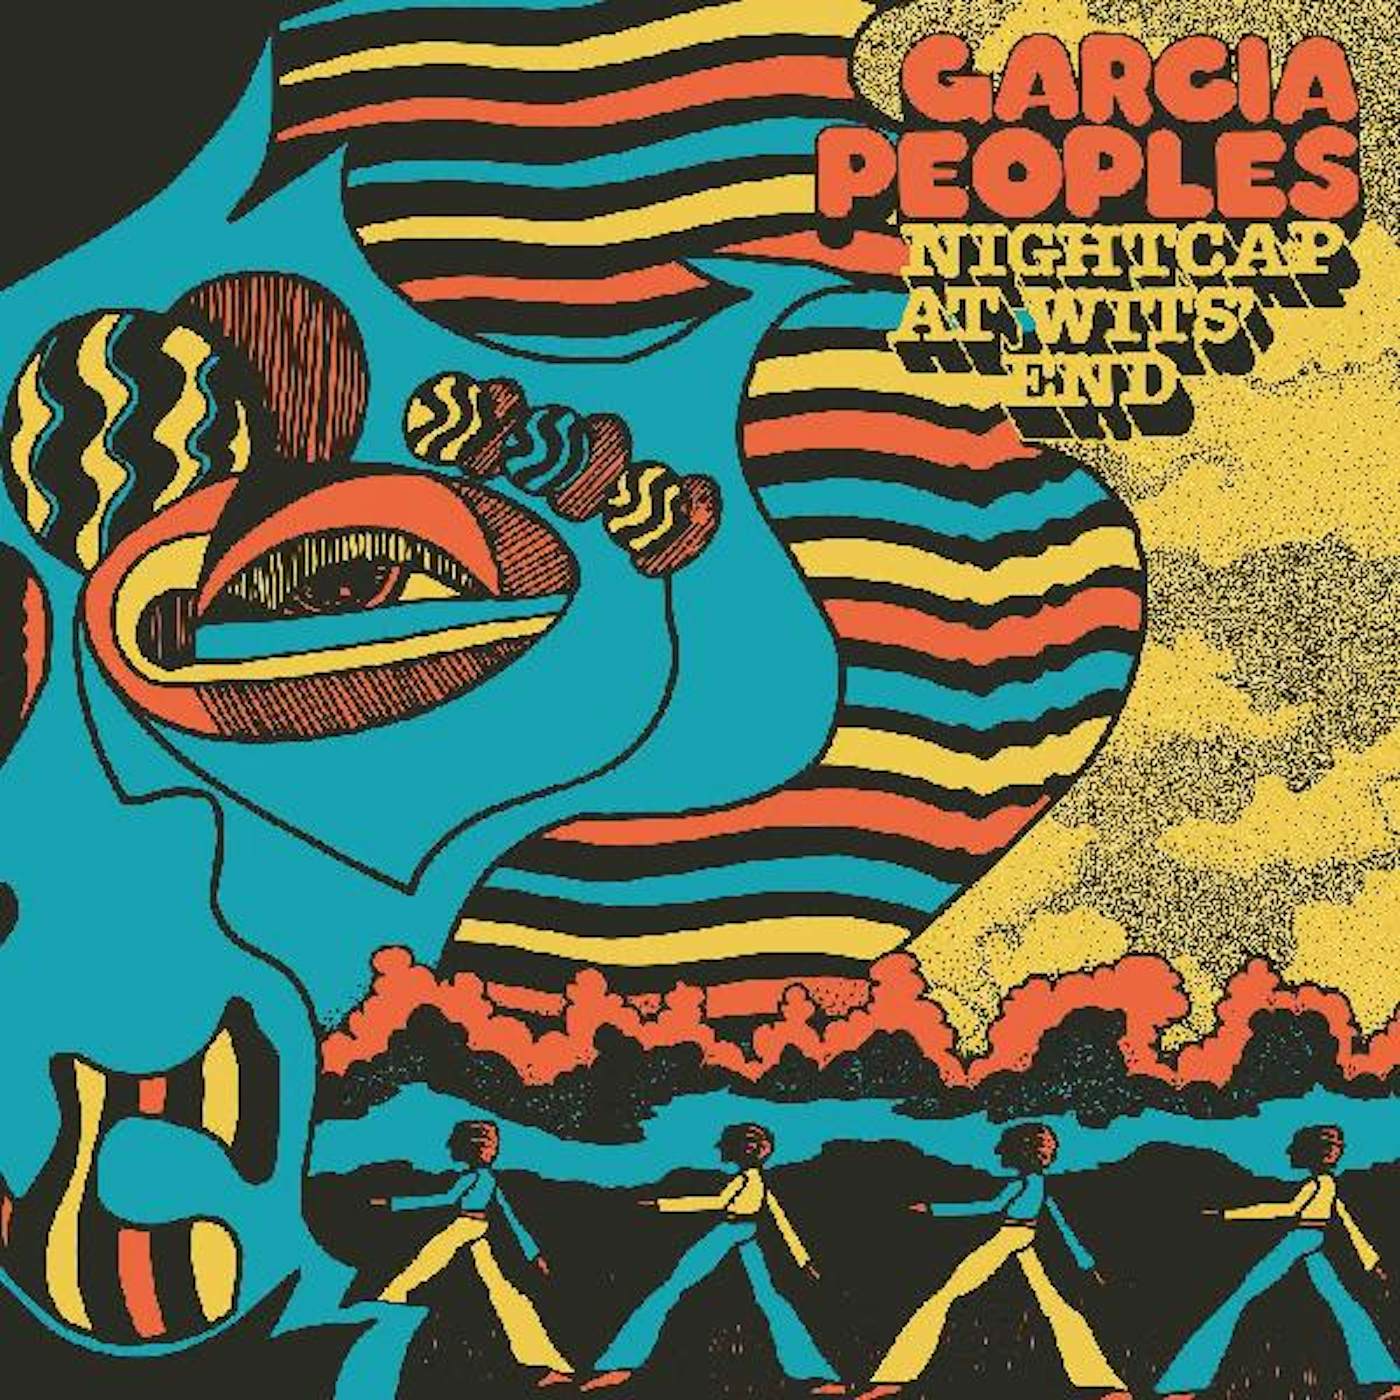 Garcia Peoples NIGHTCAP AT WITS' END CD